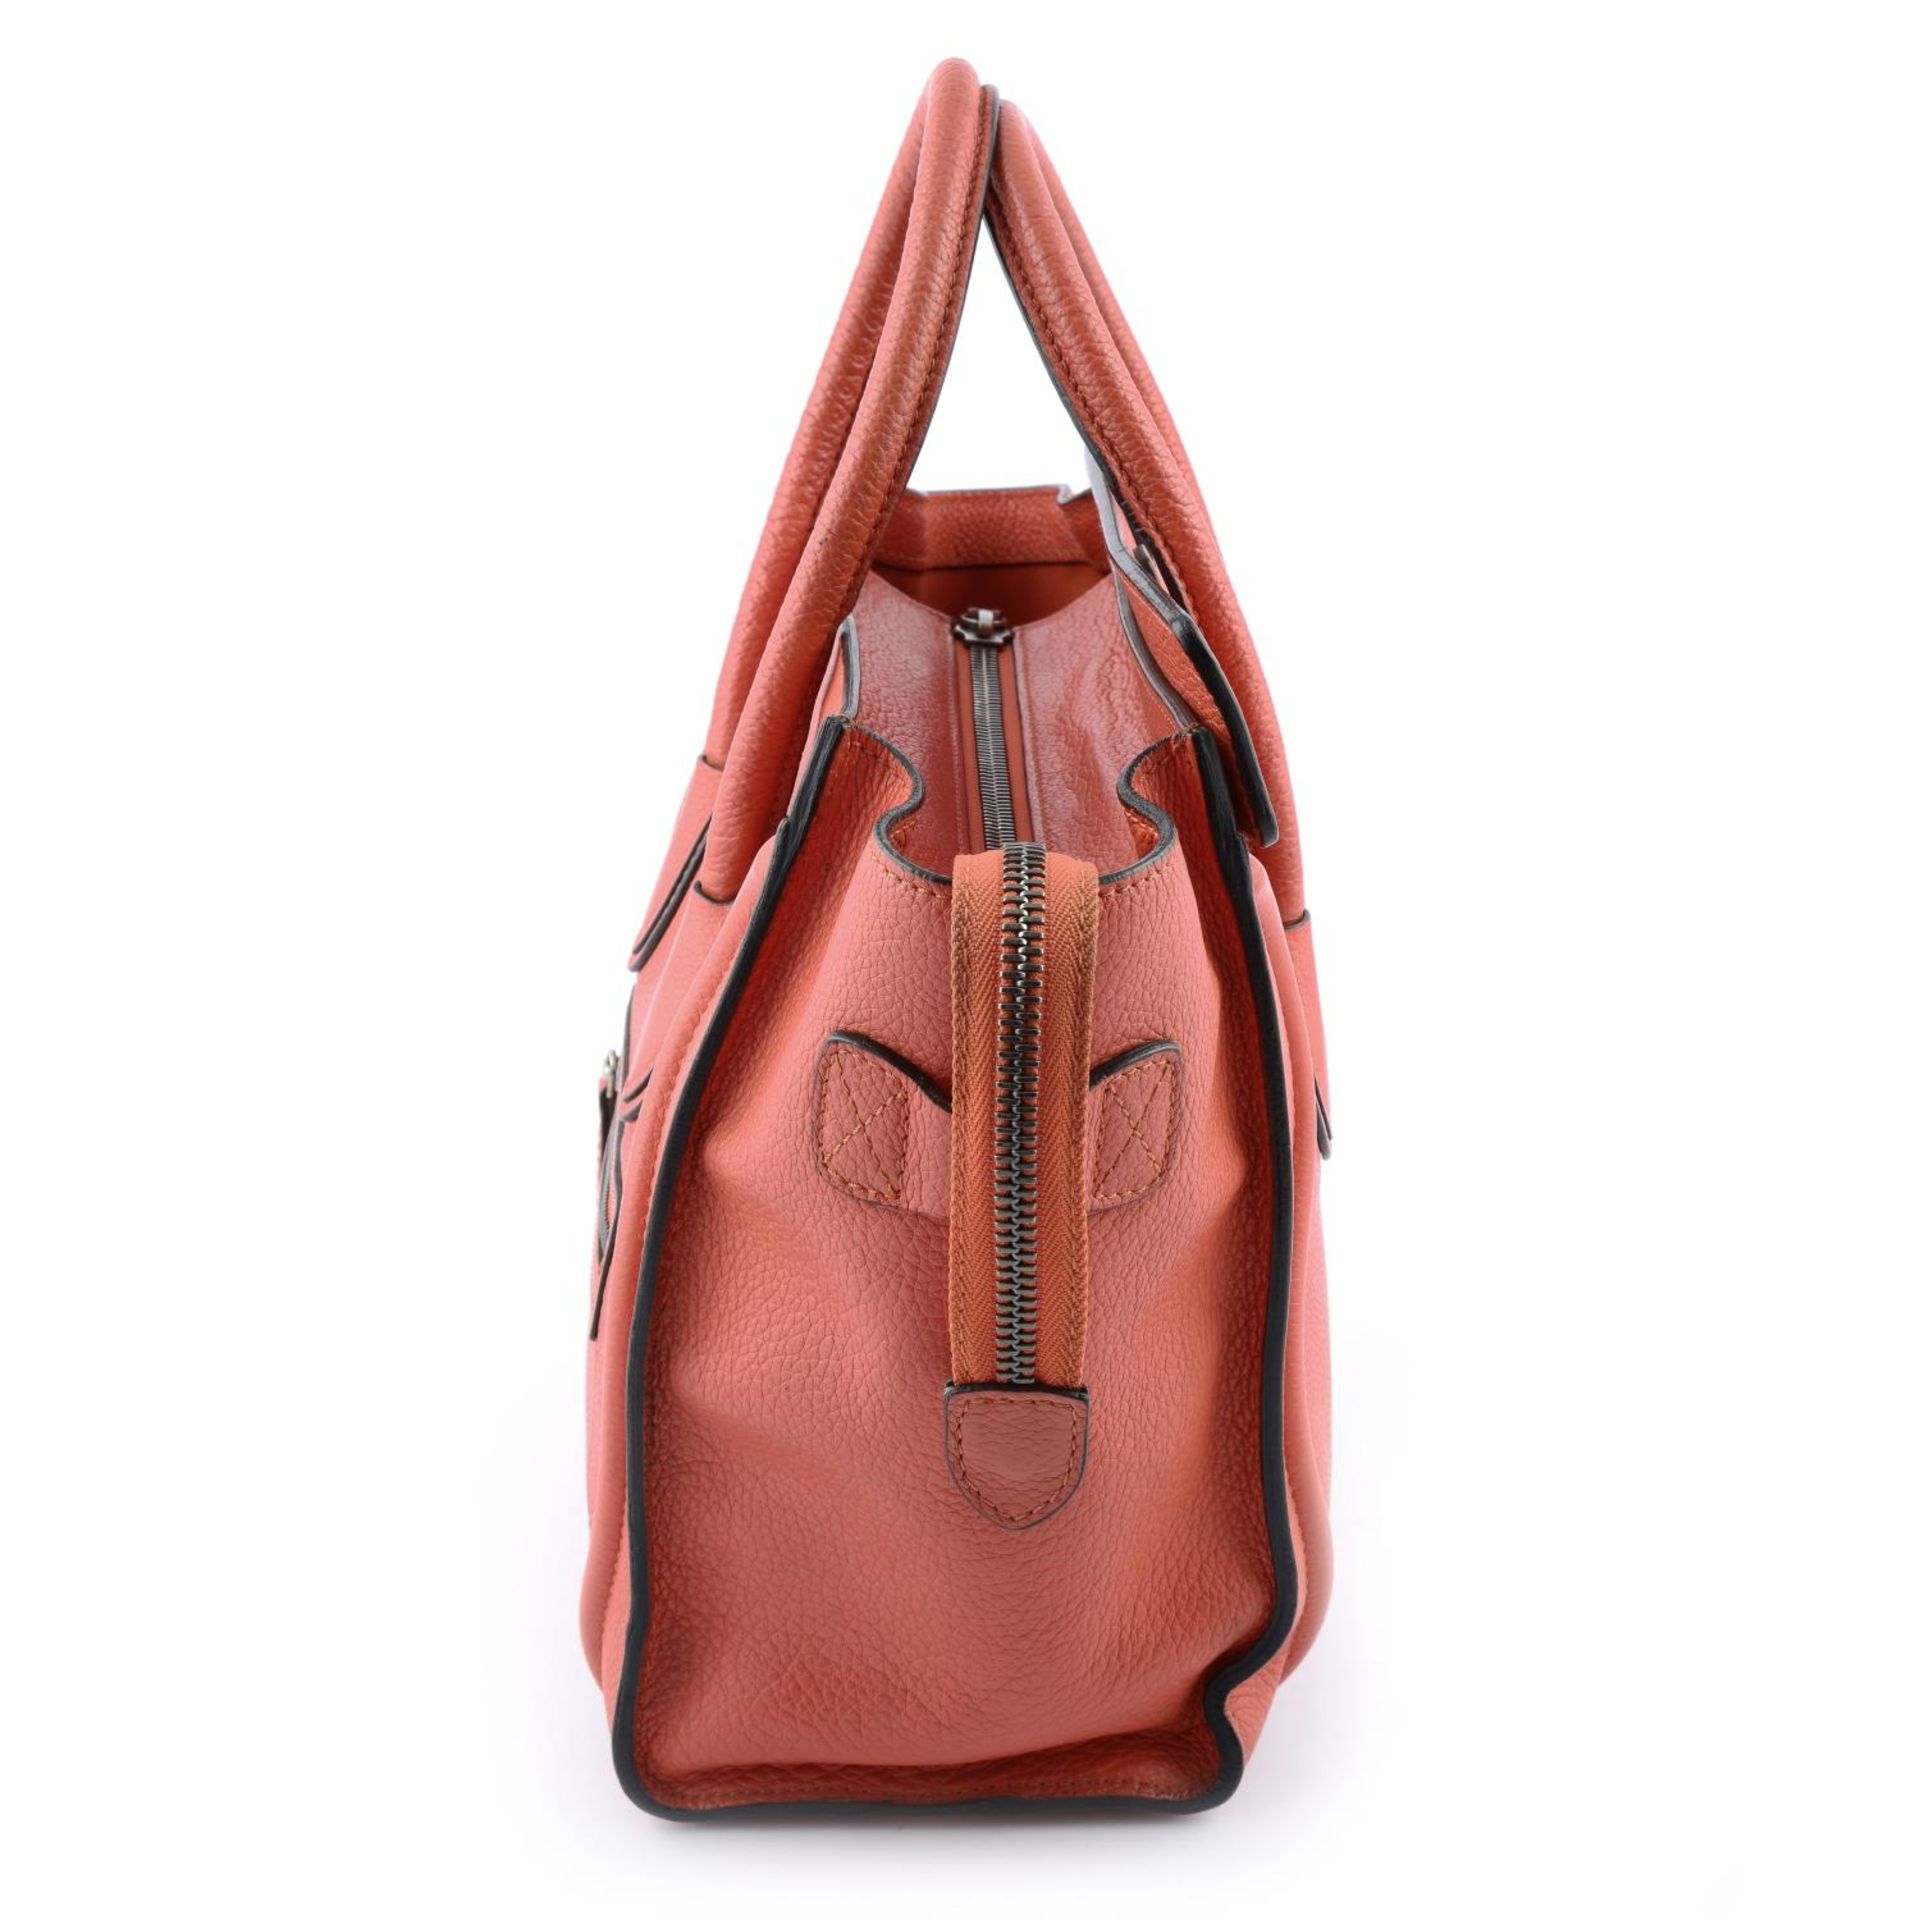 CÉLINE - a Micro Luggage Tote handbag. - Bild 3 aus 4